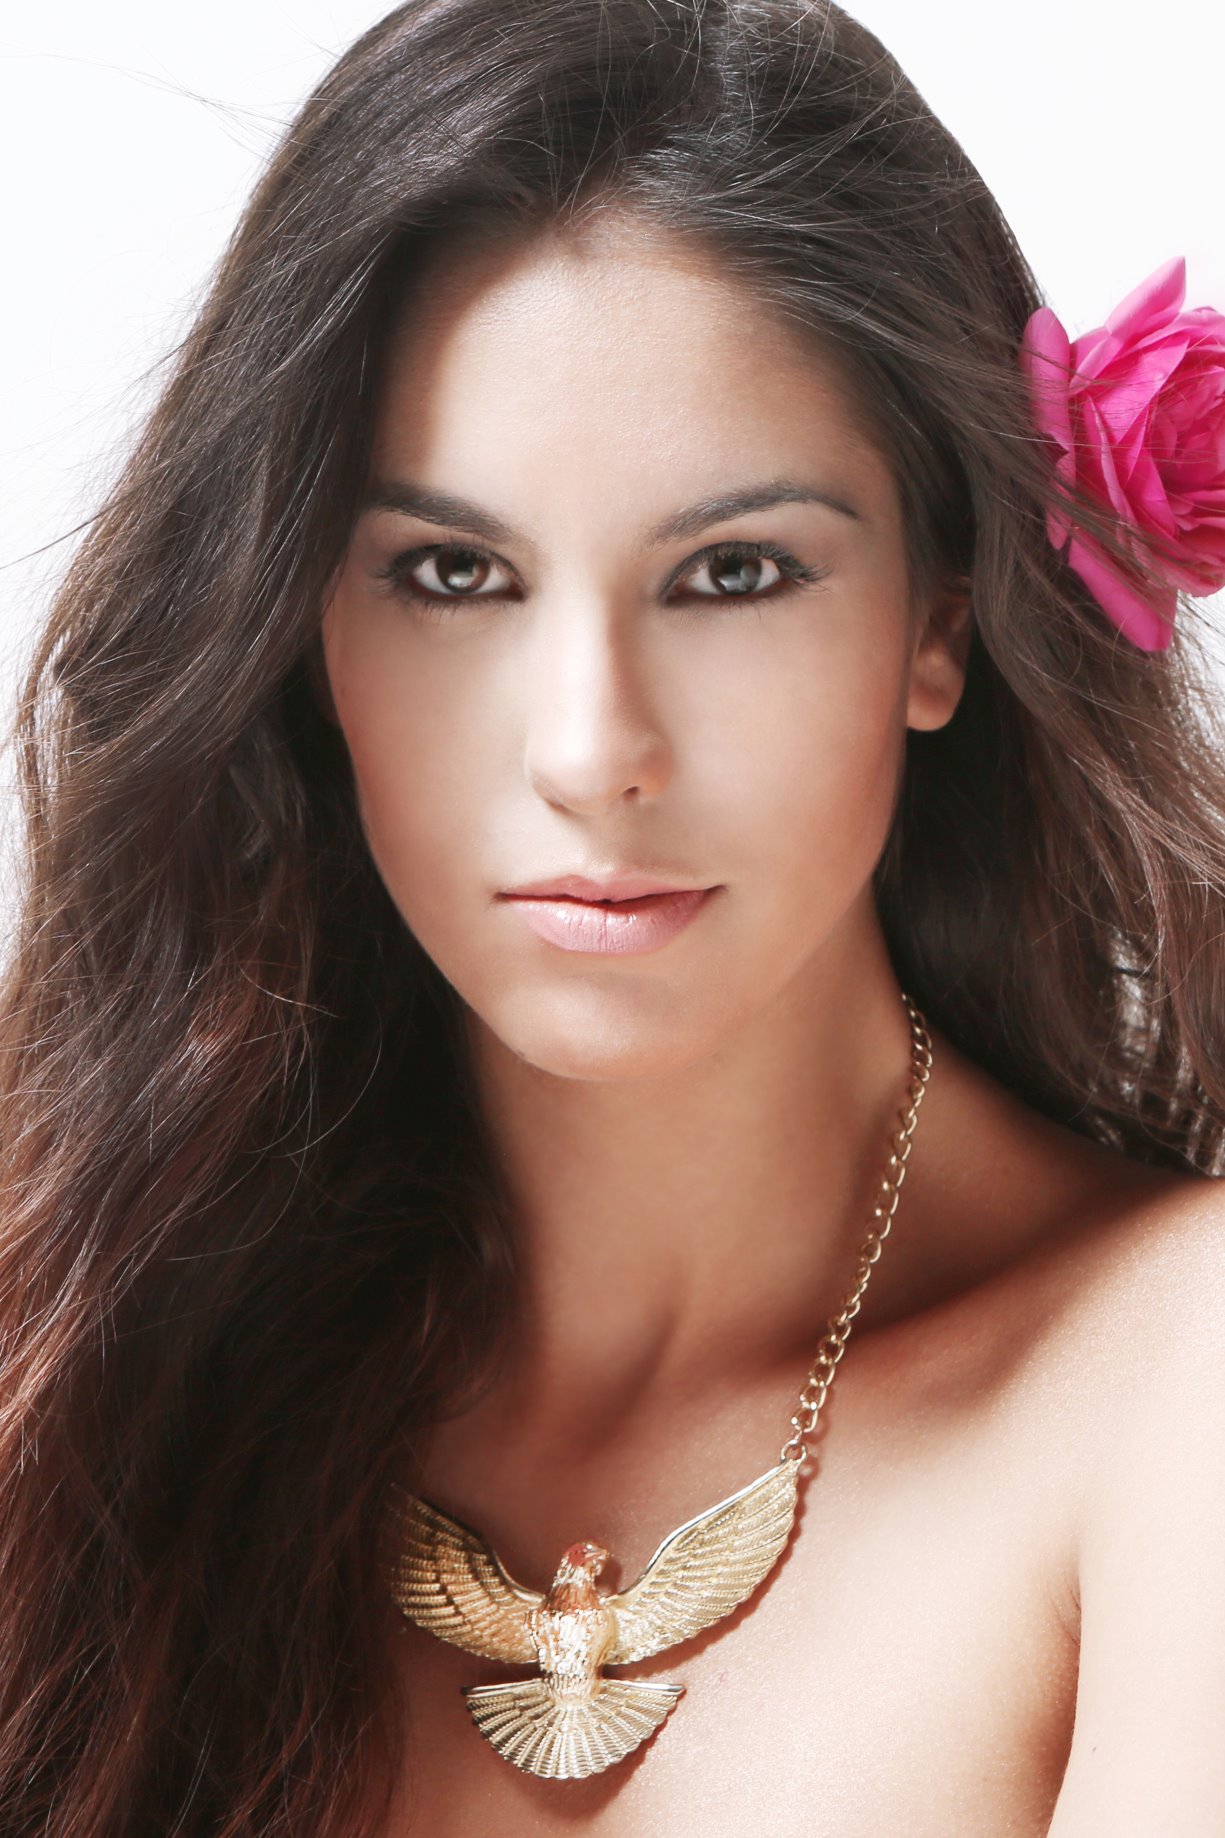 Boga Models - VANESSA LOPEZ (17) .